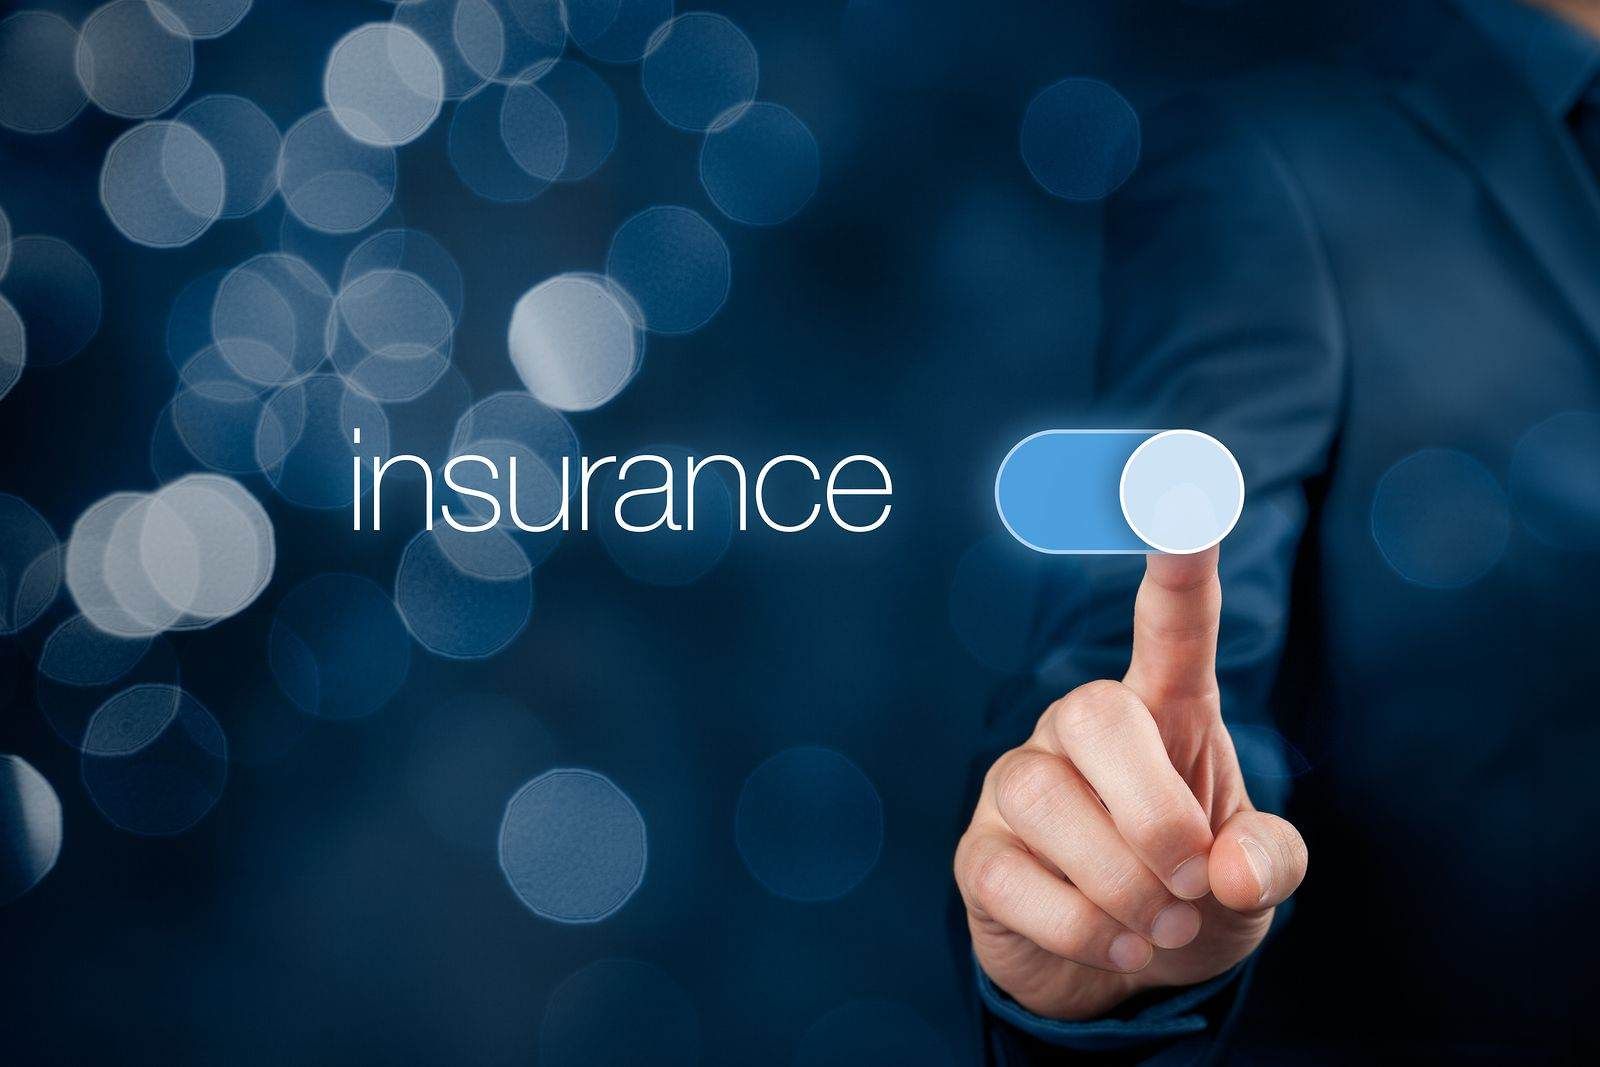 Insurance policy ખરીદતી વખતે છેતરપિંડીથી કેવી રીતે બચી શકાય ? વાંચો આ ખાસ અહેવાલ